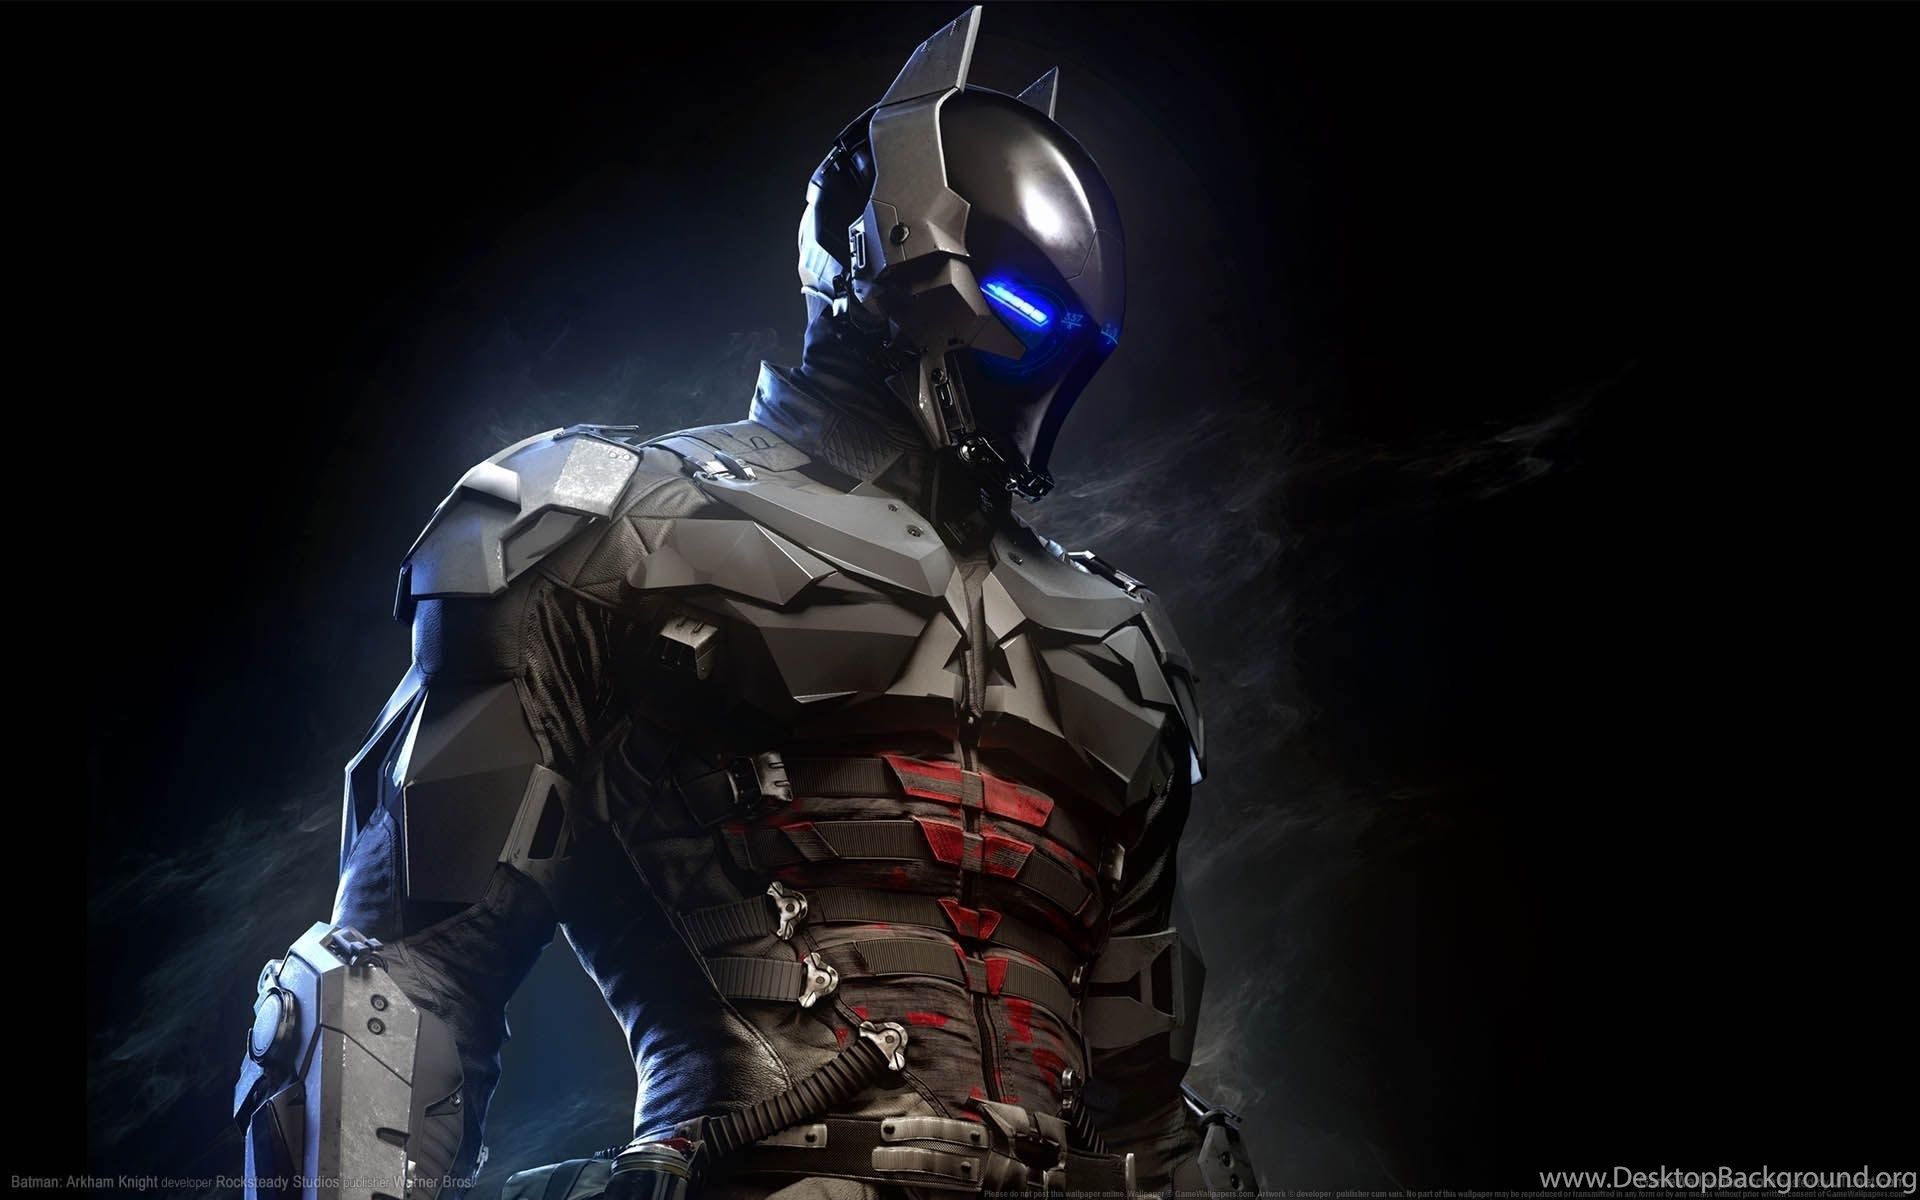 Cool PC Wallpaper Movie The Dark Knight Rises Batman Wallpaper. Desktop Background